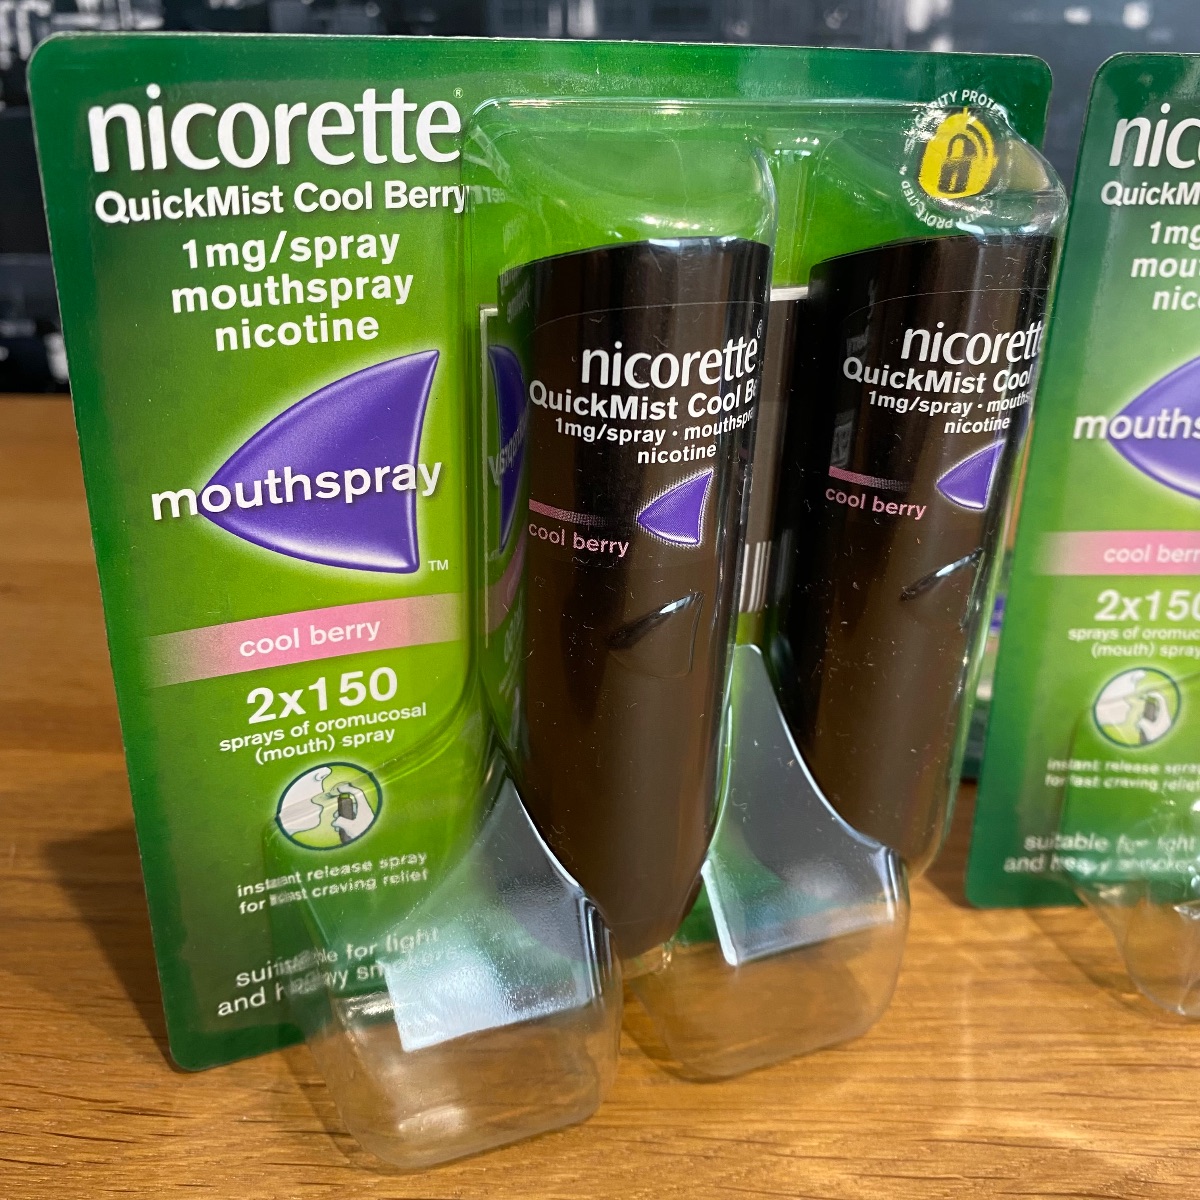 6 x Nicorette Quickmist Cool Berry Mouthspray 12 x 150 Sprays Nicotine Lot 69547 0691162051957 (Brand New)